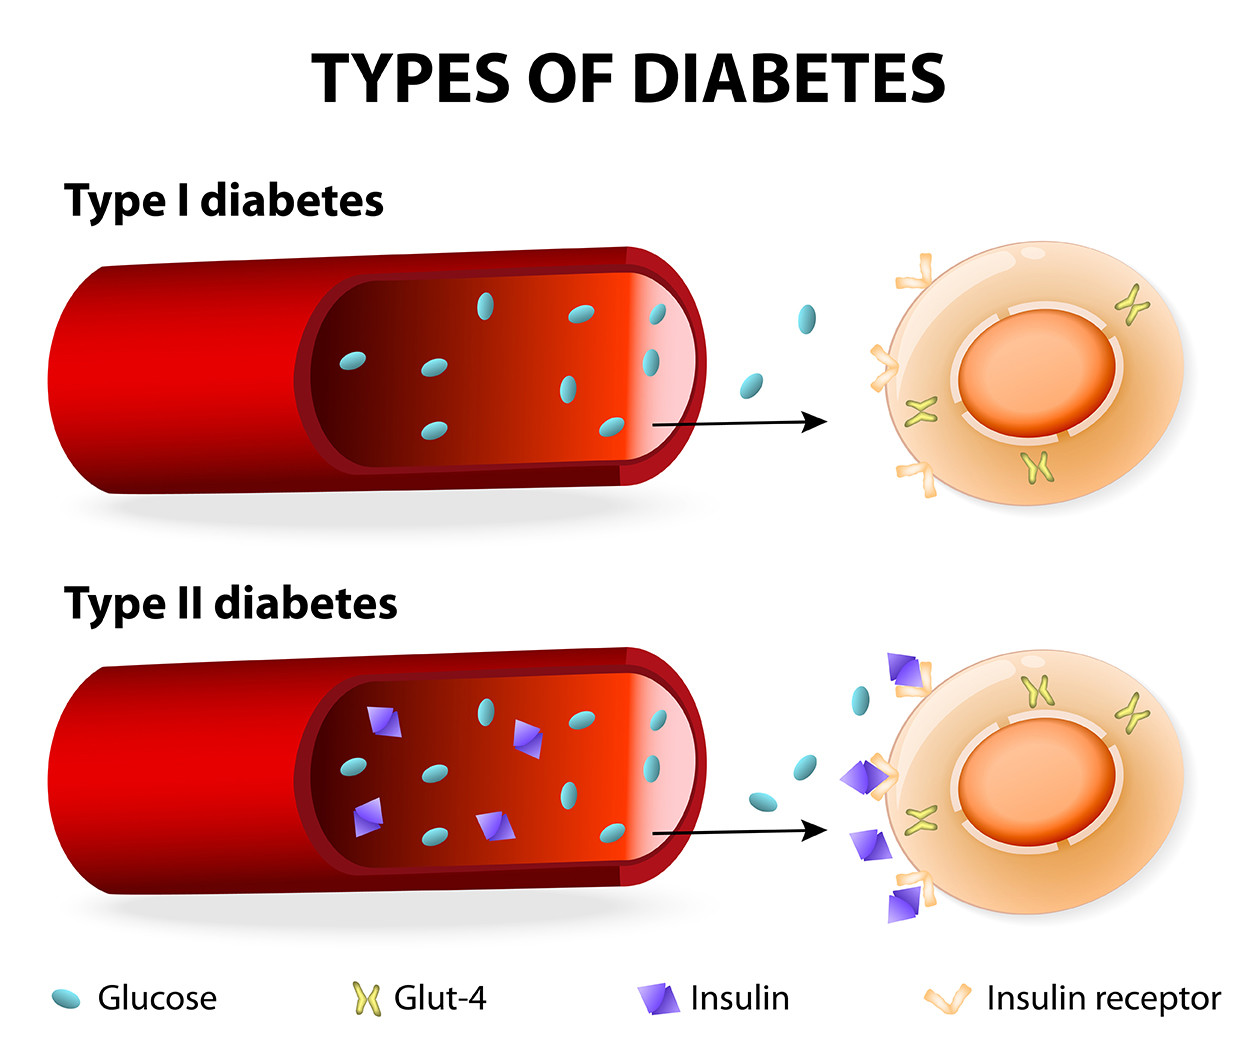 Type 1 and Type 2 diabetes